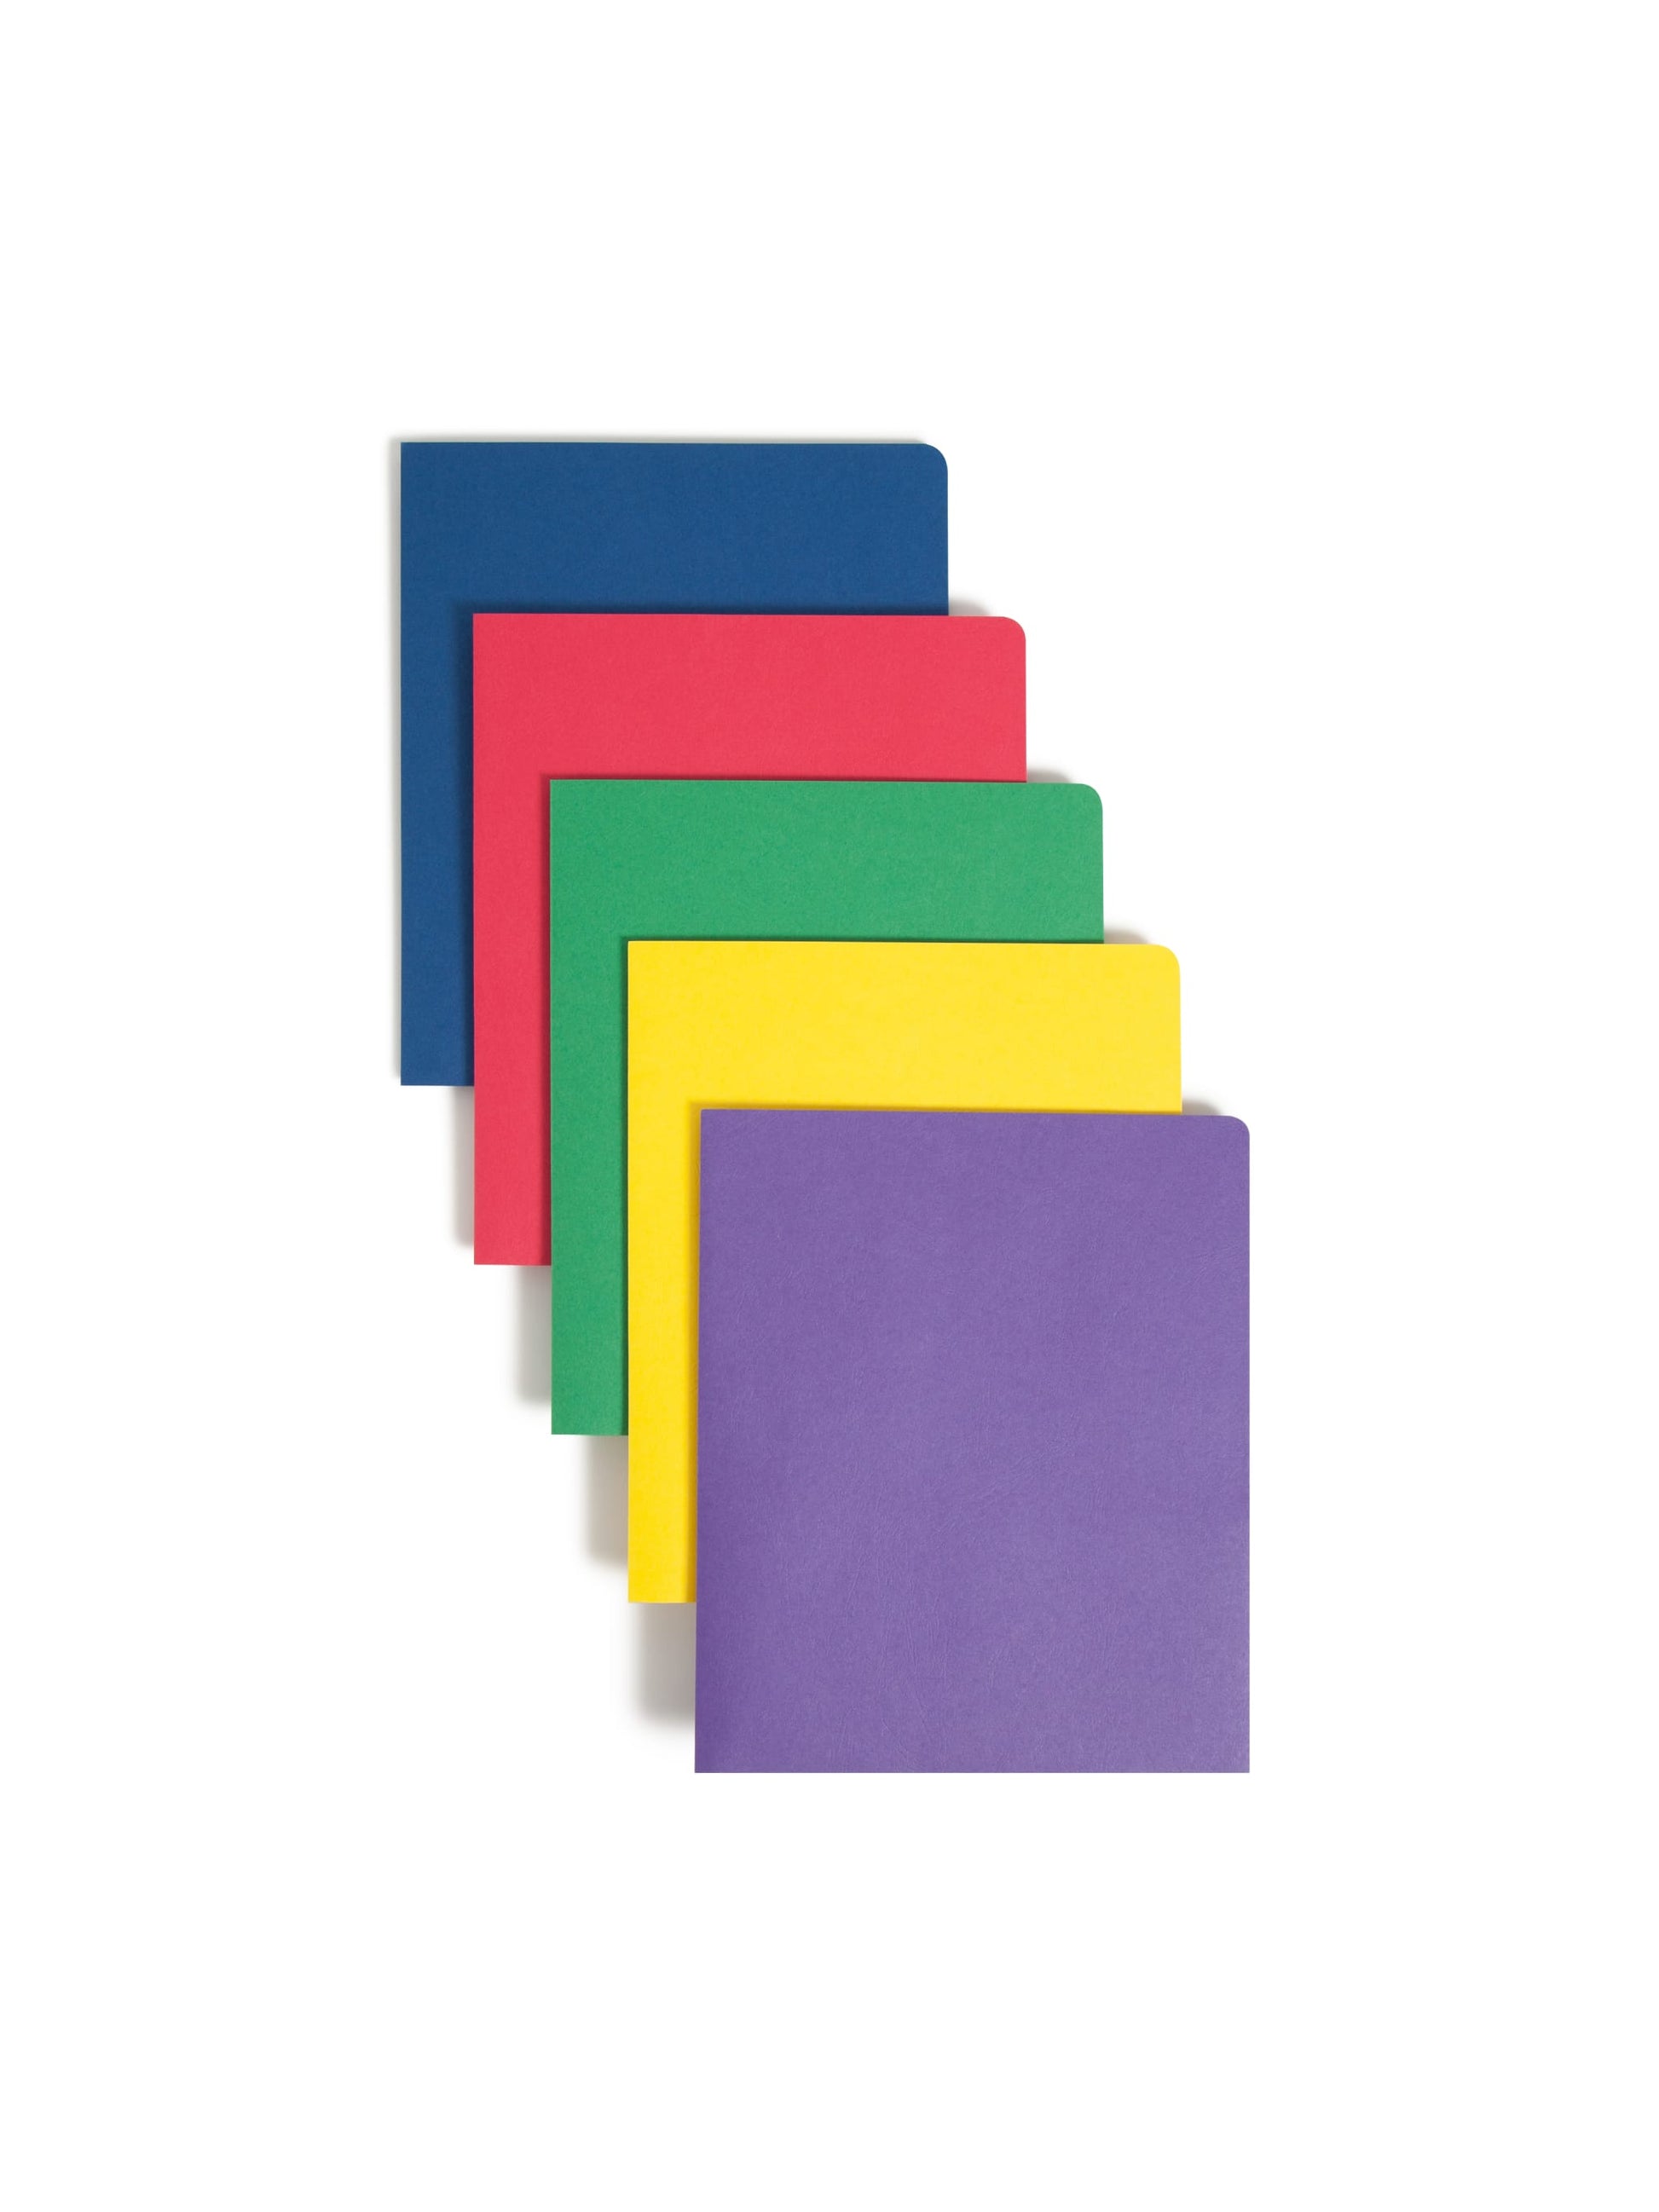 Standard Two-Pocket Folders, 50 count, Assorted Colors Color, Letter Size, Set of 0, 50086486878635